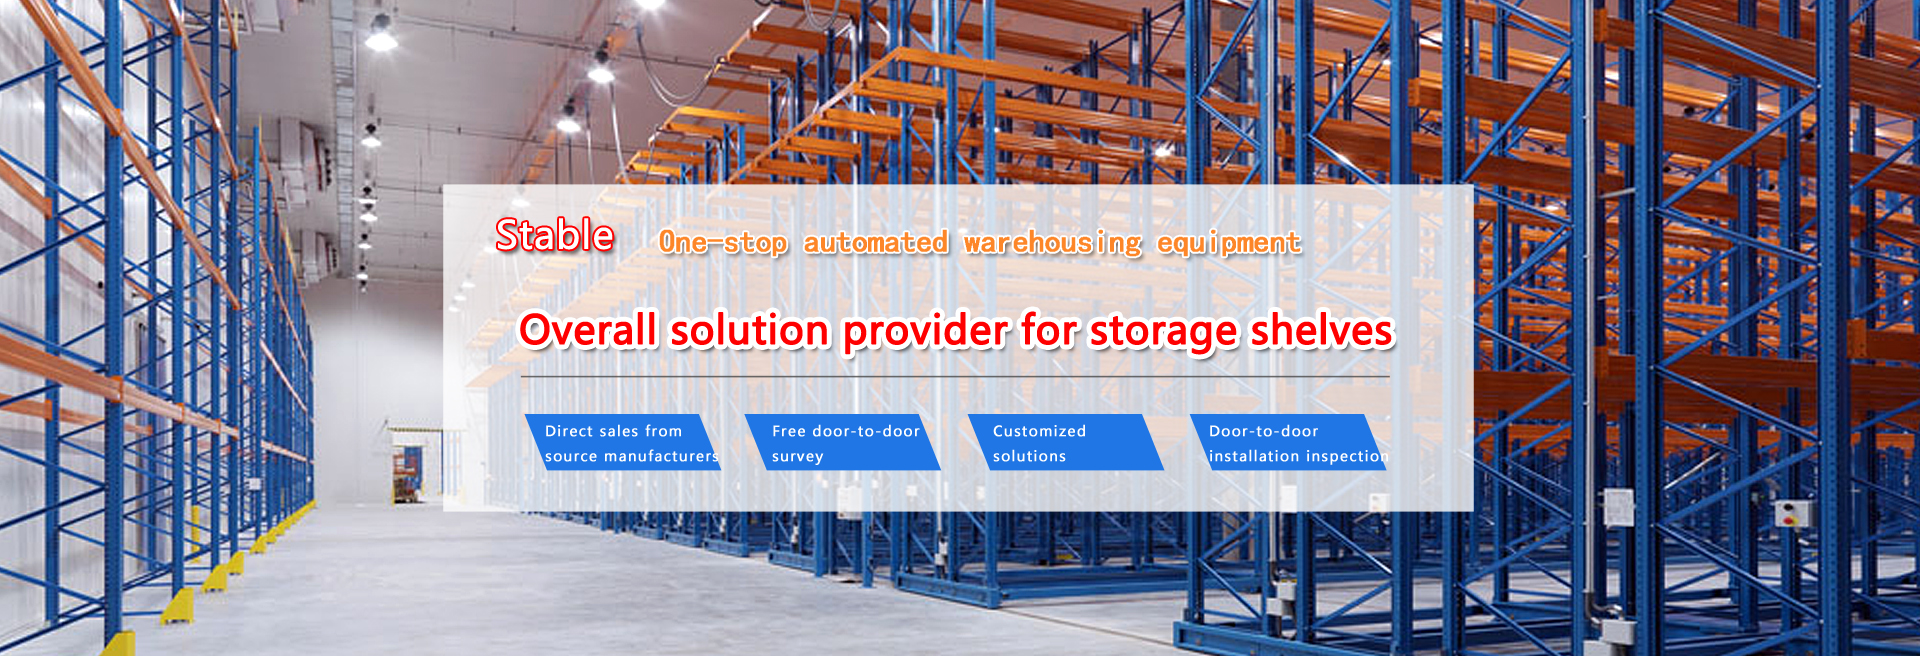 Overall solution provider for storage shelves